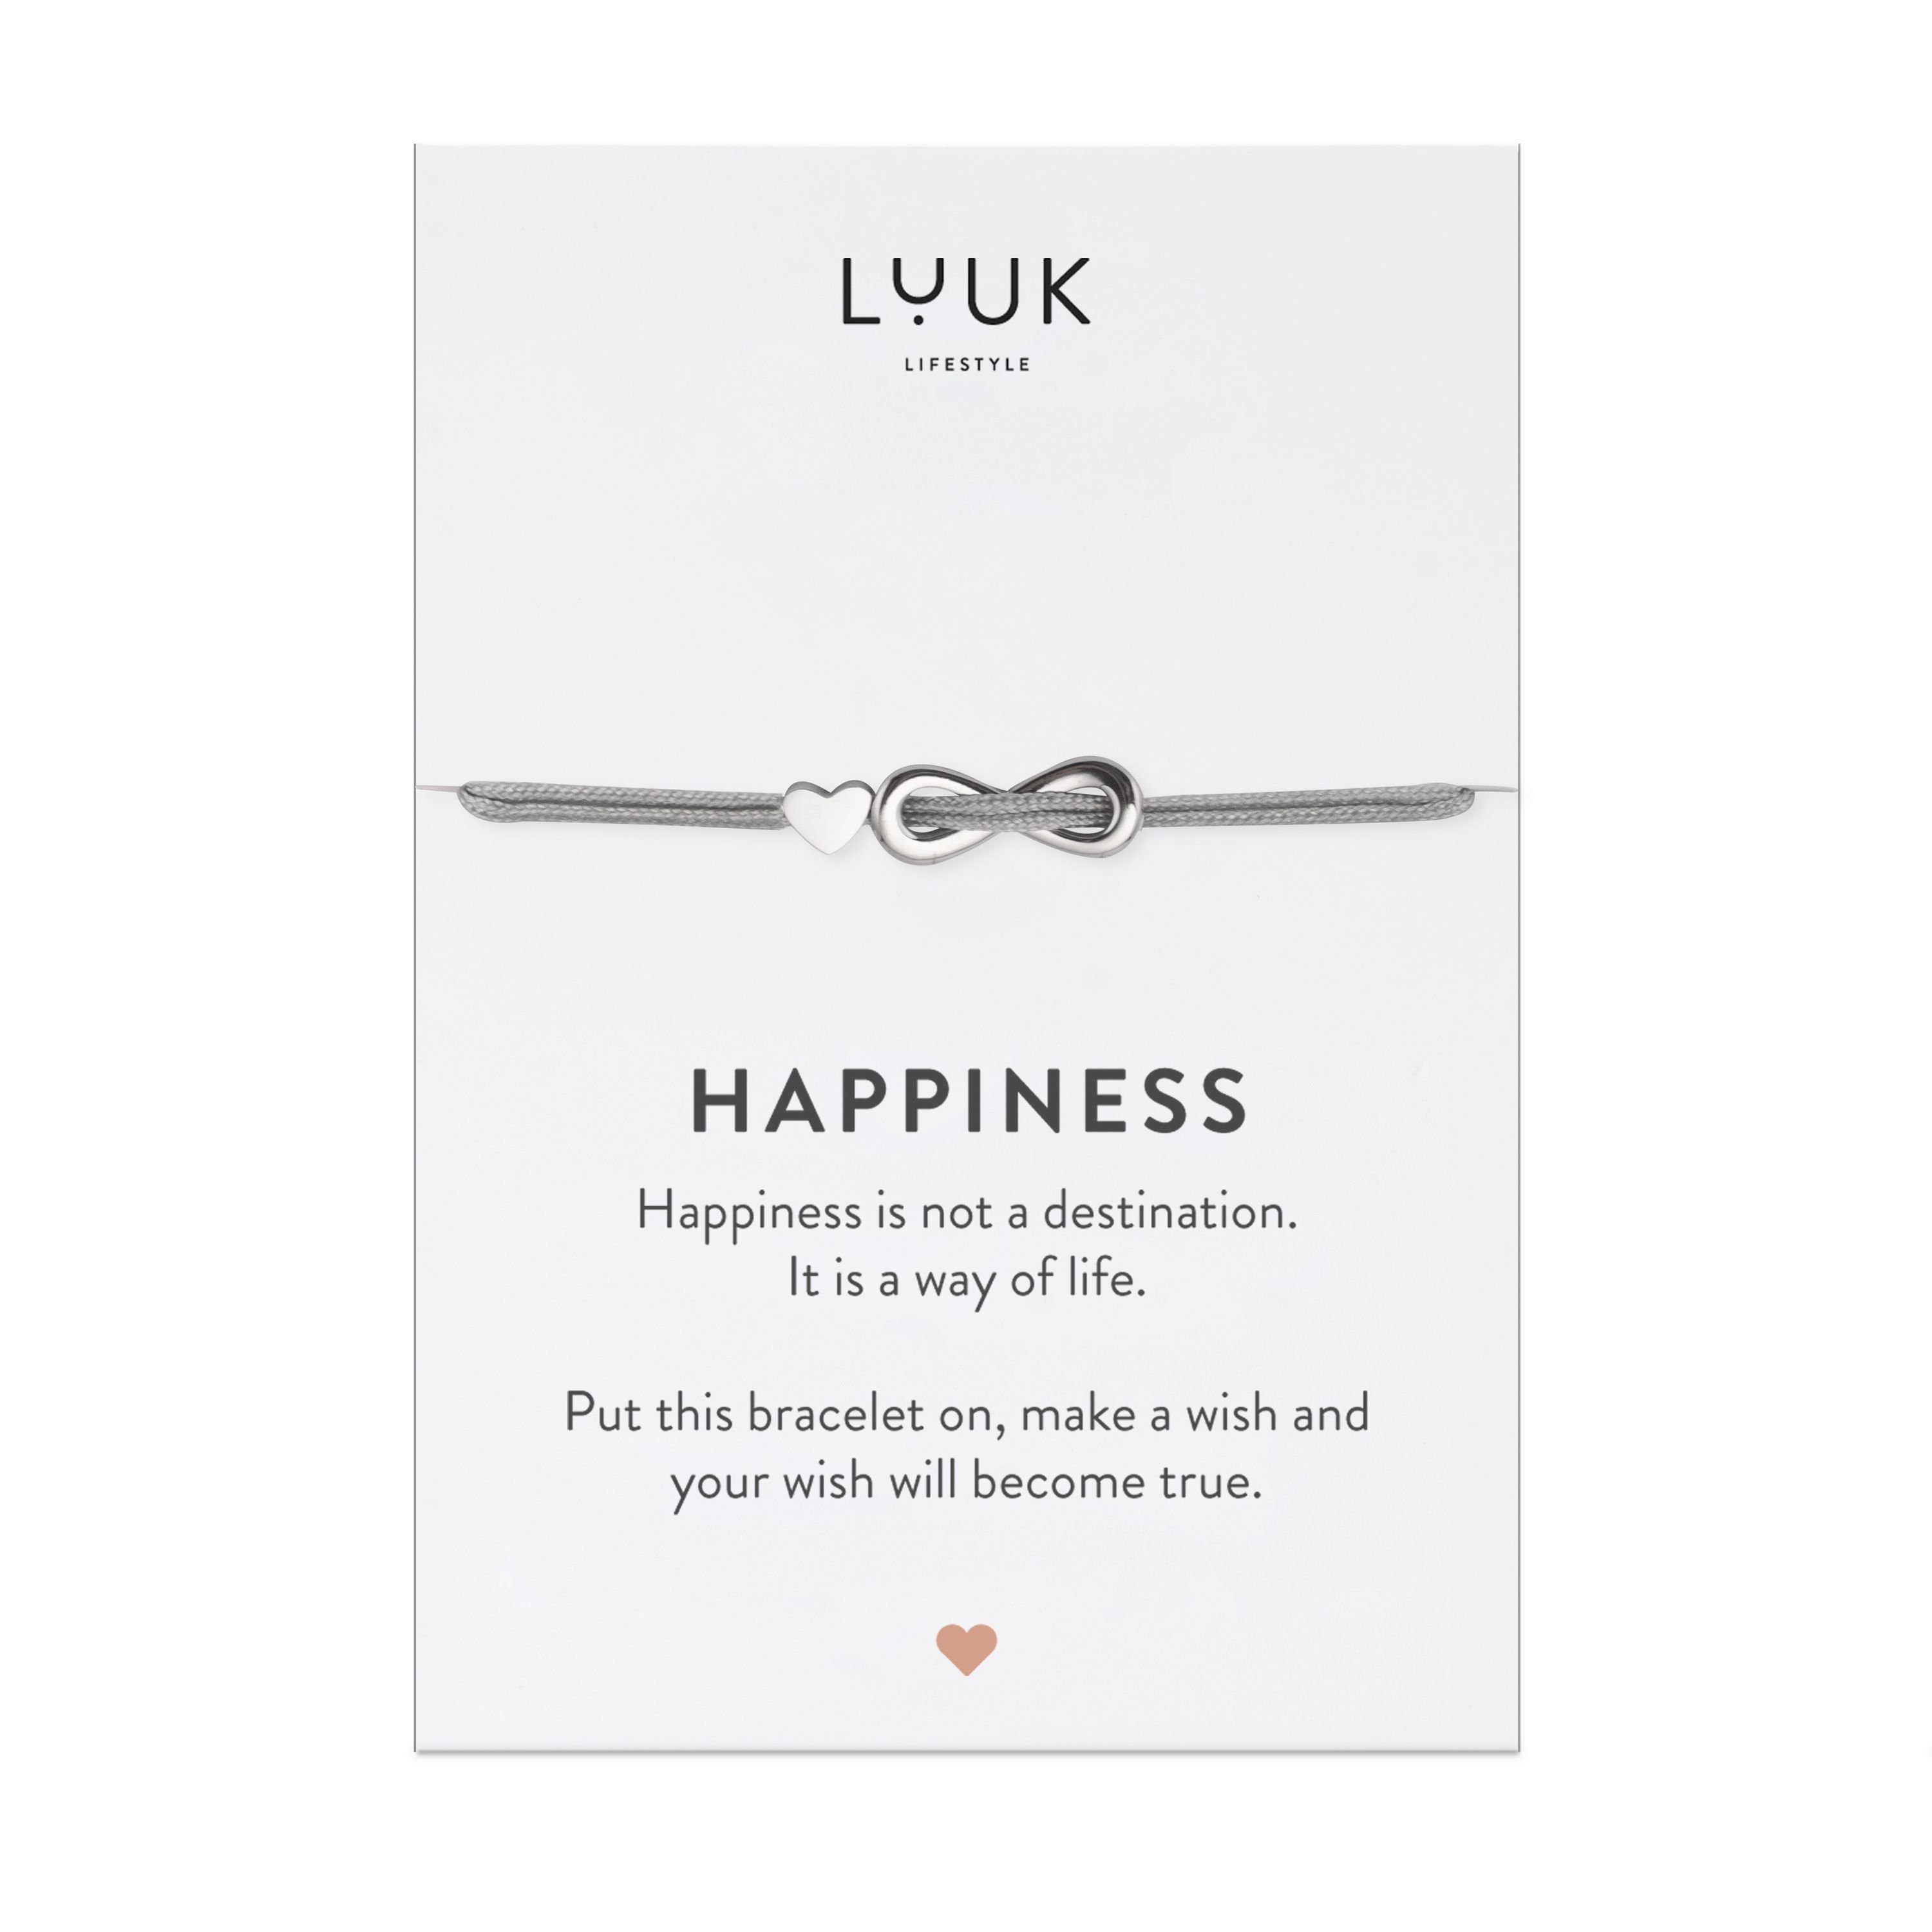 LUUK LIFESTYLE Freundschaftsarmband Infinity, handmade, mit Happiness Spruchkarte Silber